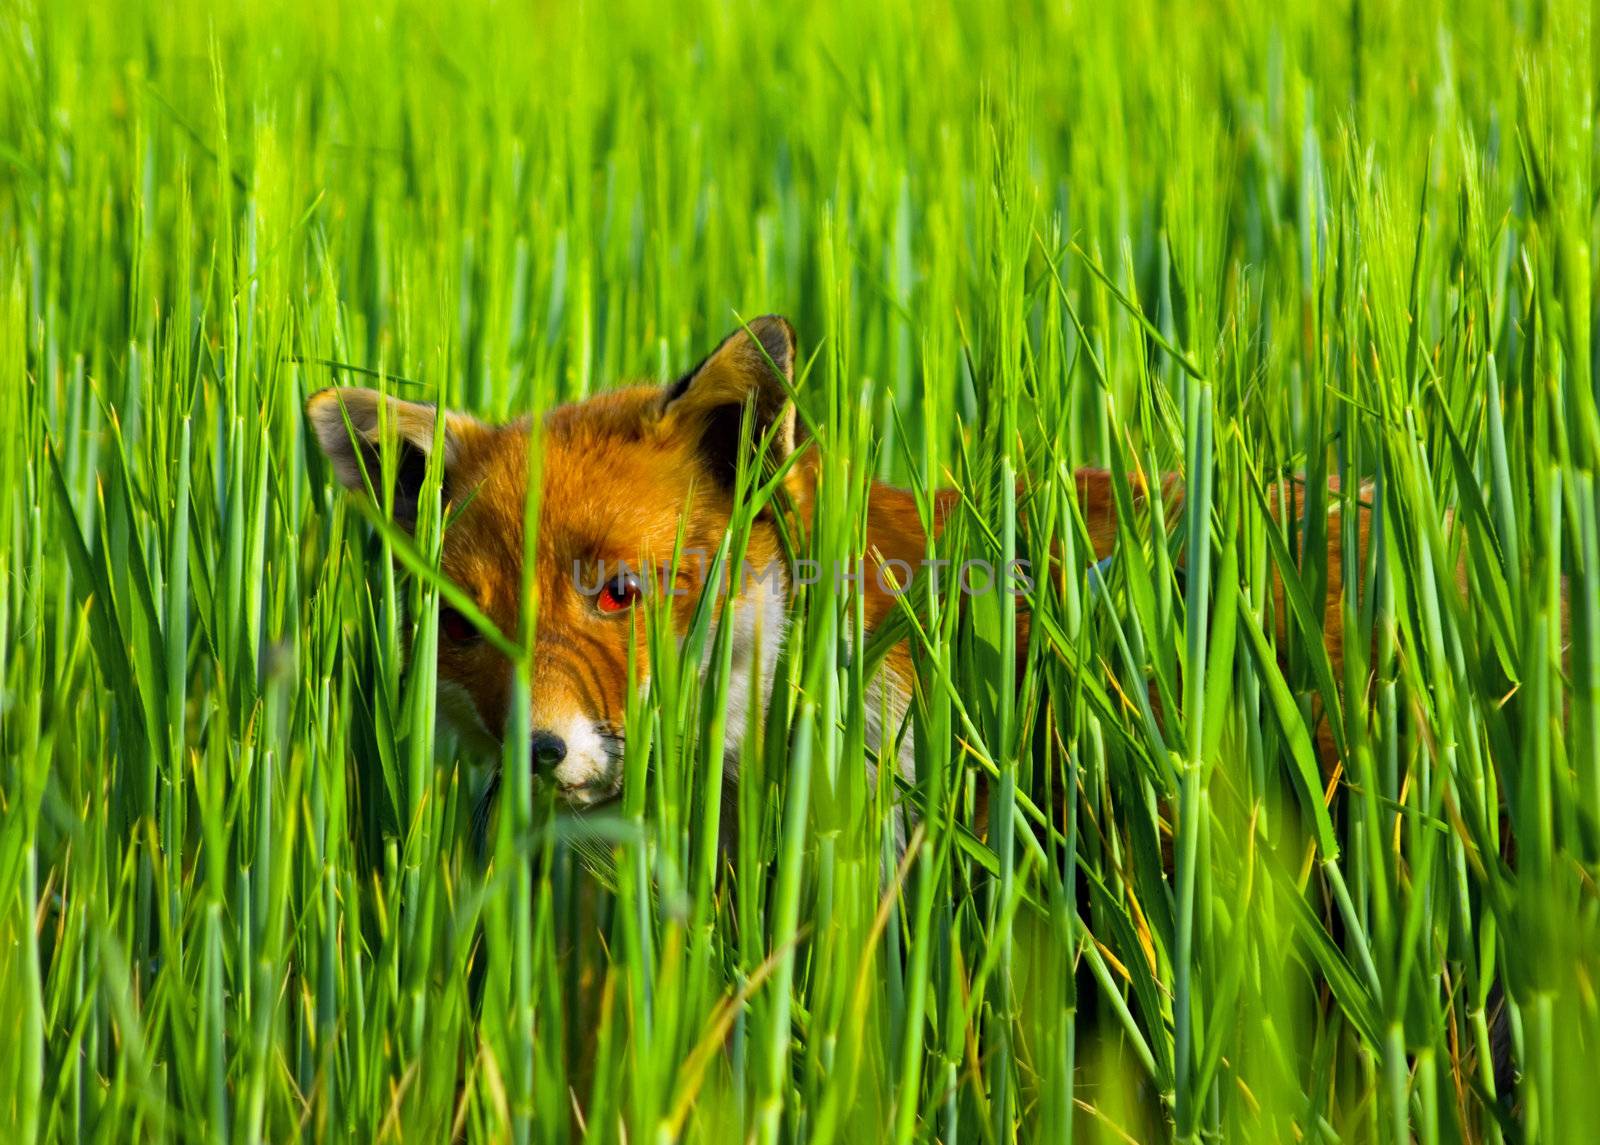 alerted wild fox  hiding in a green meadow, looking through long grass blades